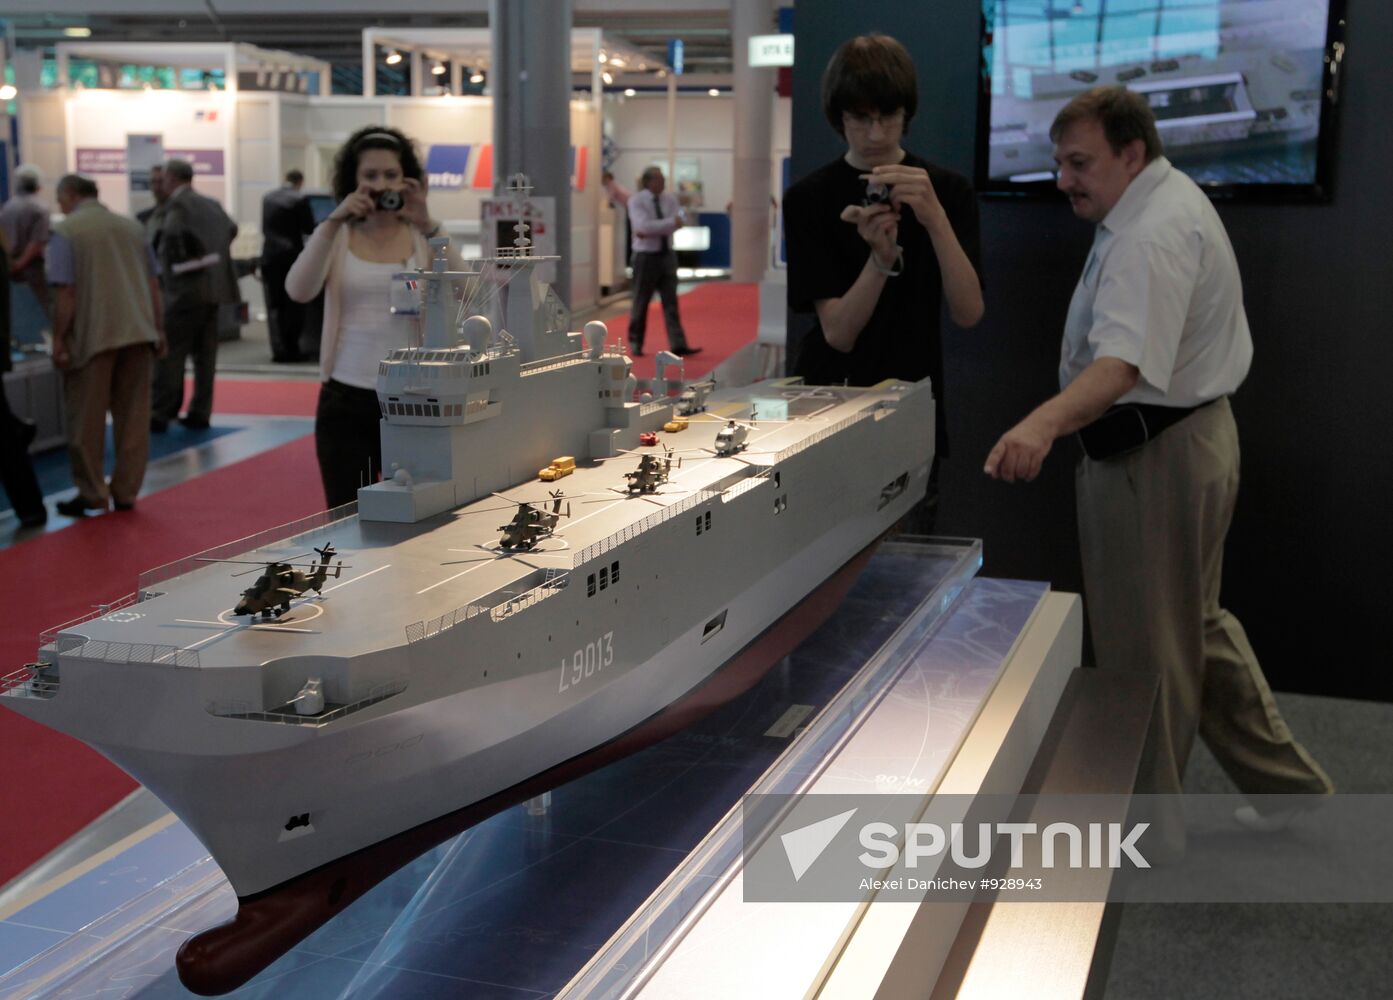 International Maritime Defence Show kicks off in St. Petersburg